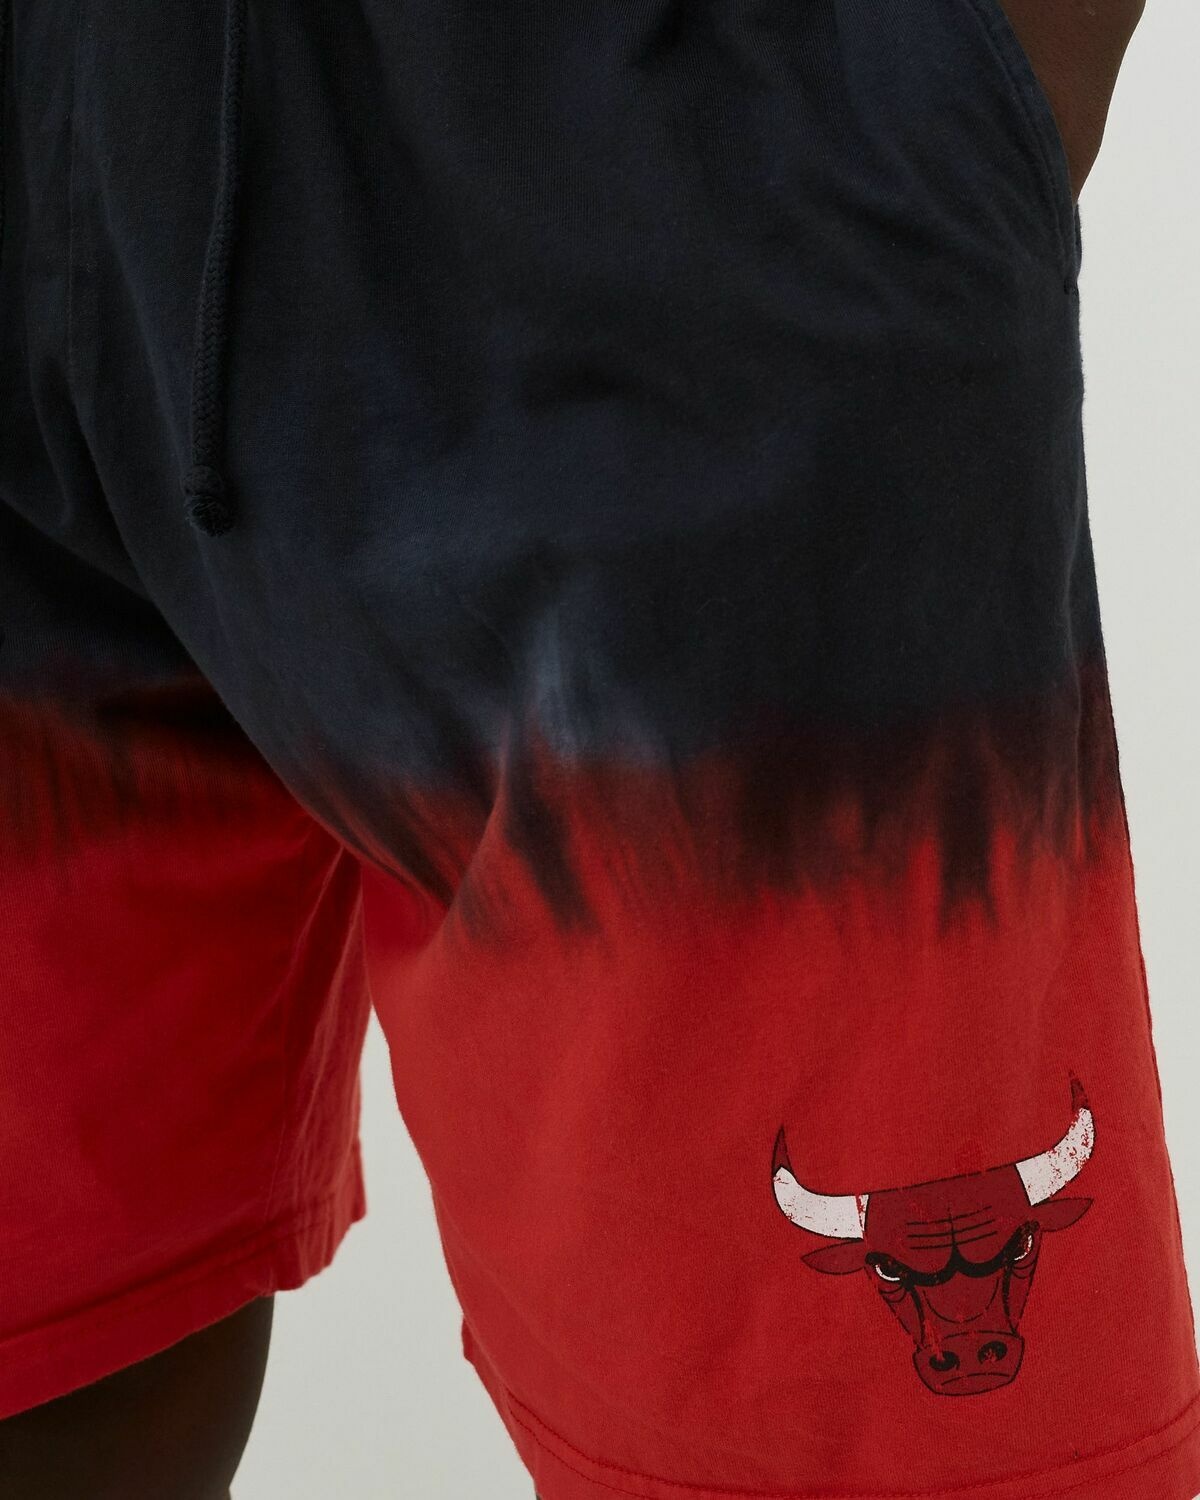 Mitchell & Ness Nba Tie Dye Shorts Bulls Black - Mens - Sport & Team Shorts